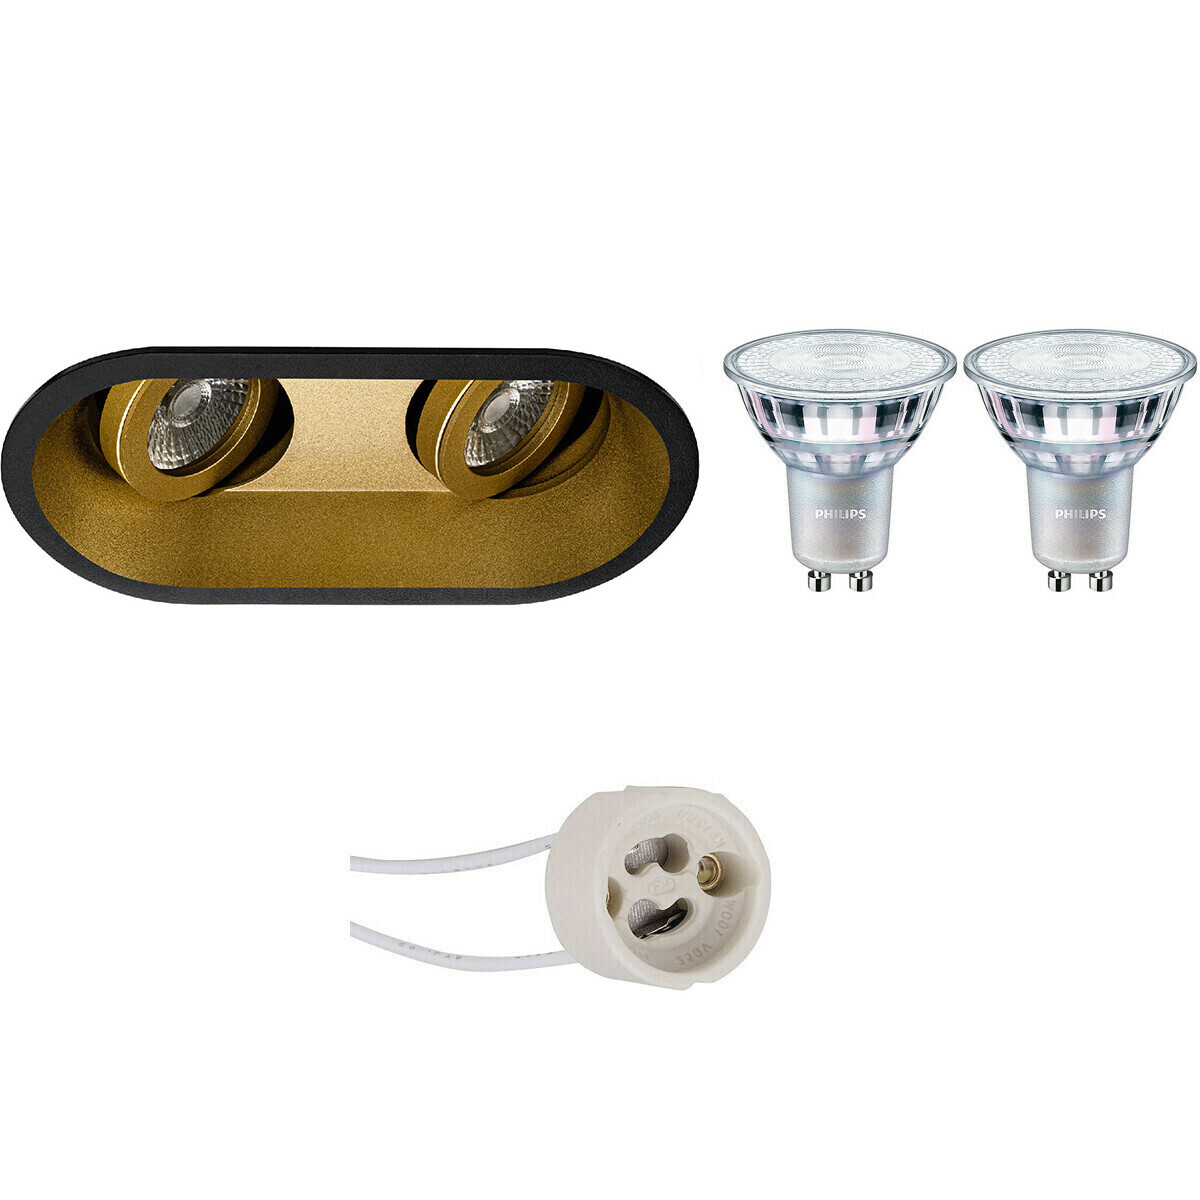 BES LED LED Spot Set - Pragmi Zano Pro - GU10 Fitting - Inbouw Ovaal Dubbel - Mat Zwart/Goud - Kantelbaar - 185x93mm - Philips - MASTER 927 36D VLE - 4.9W - Warm Wit 2200K-2700K - DimTone Dimbaar